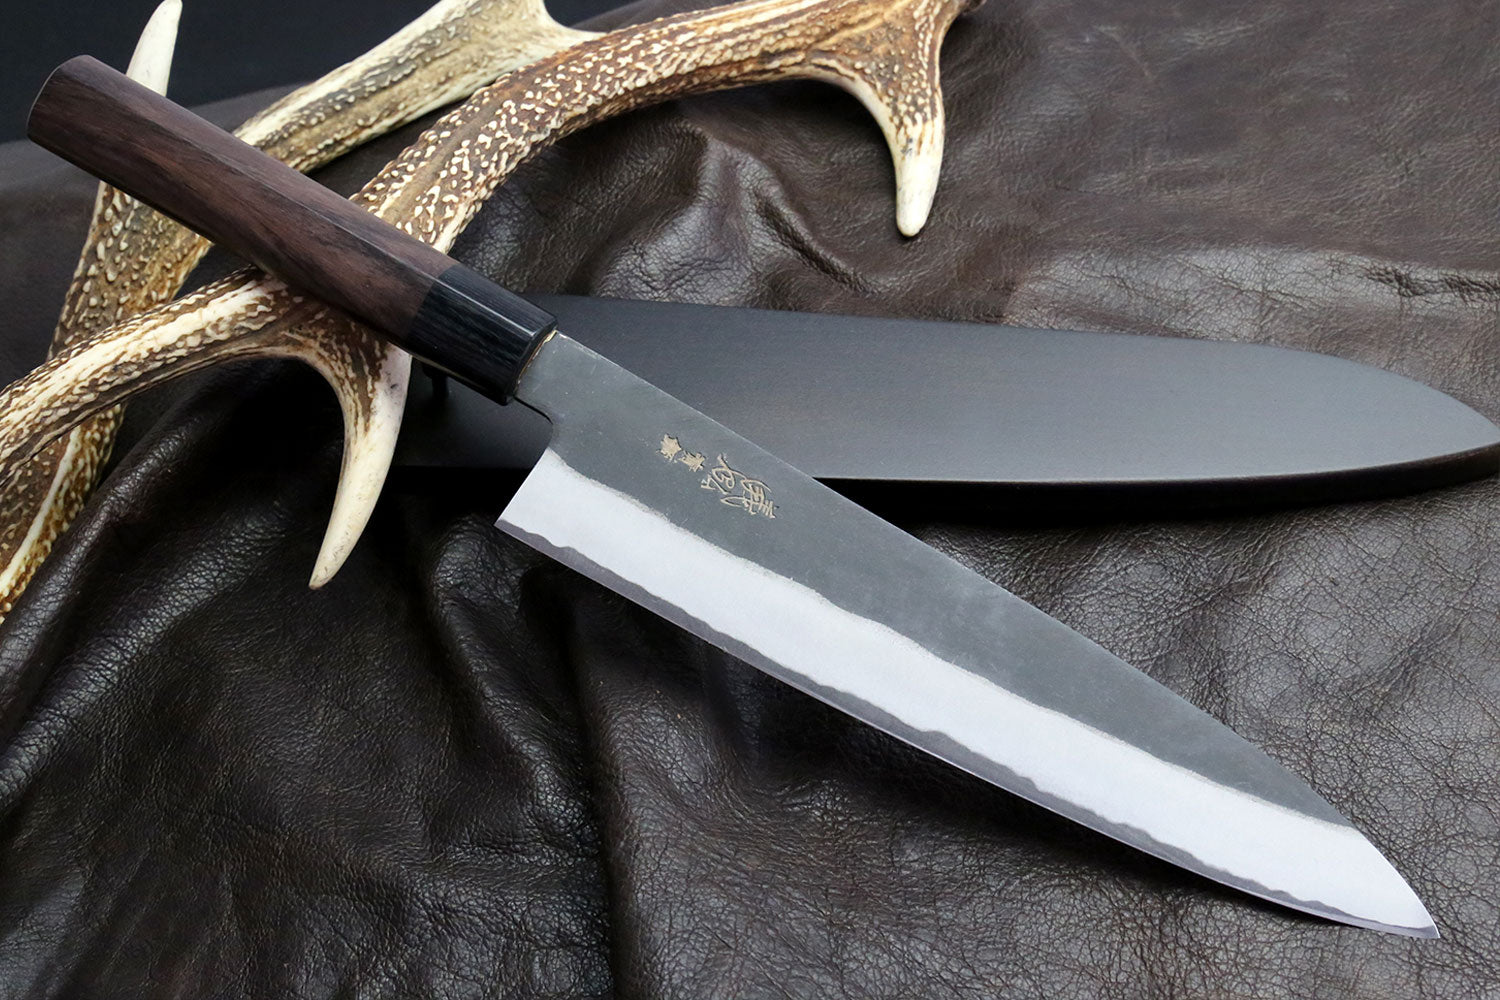  Shokunin USA - Kotetsu - Japanese Chef Knife - Pro